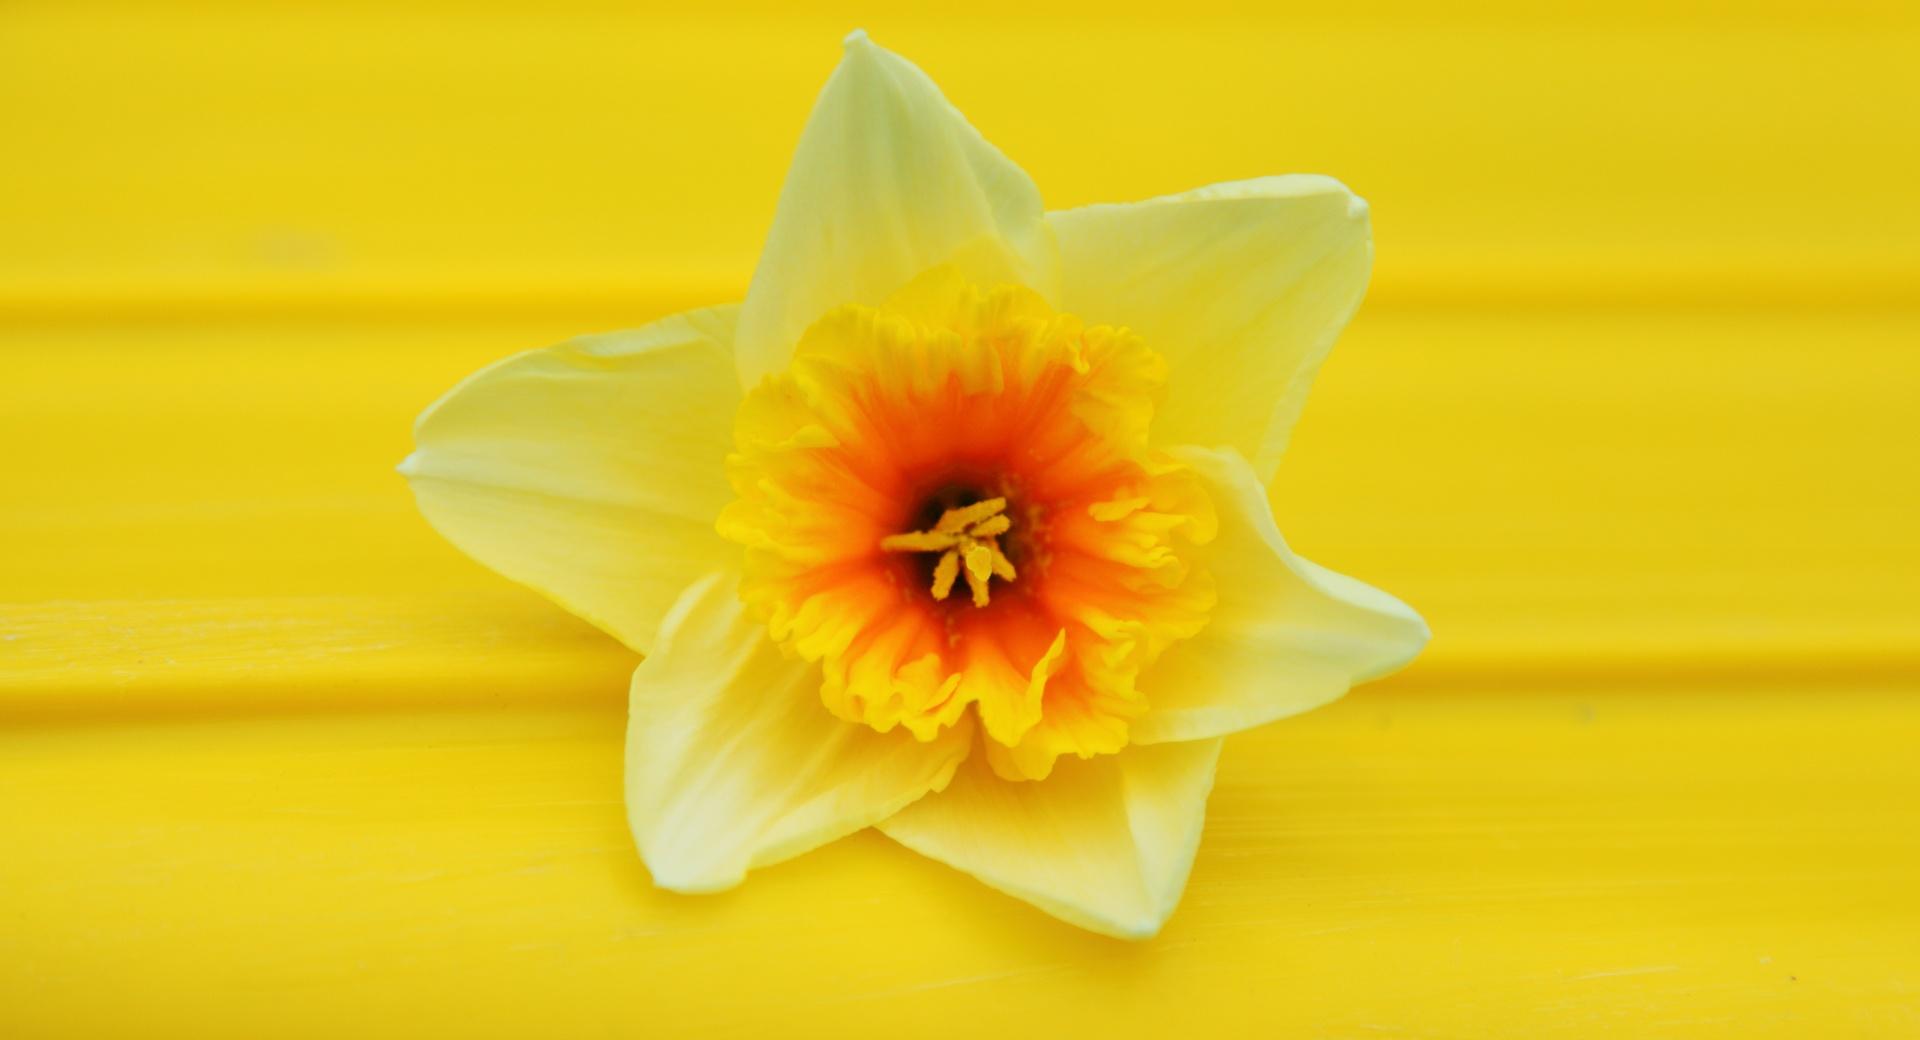 Daffodil Macro at 1024 x 1024 iPad size wallpapers HD quality